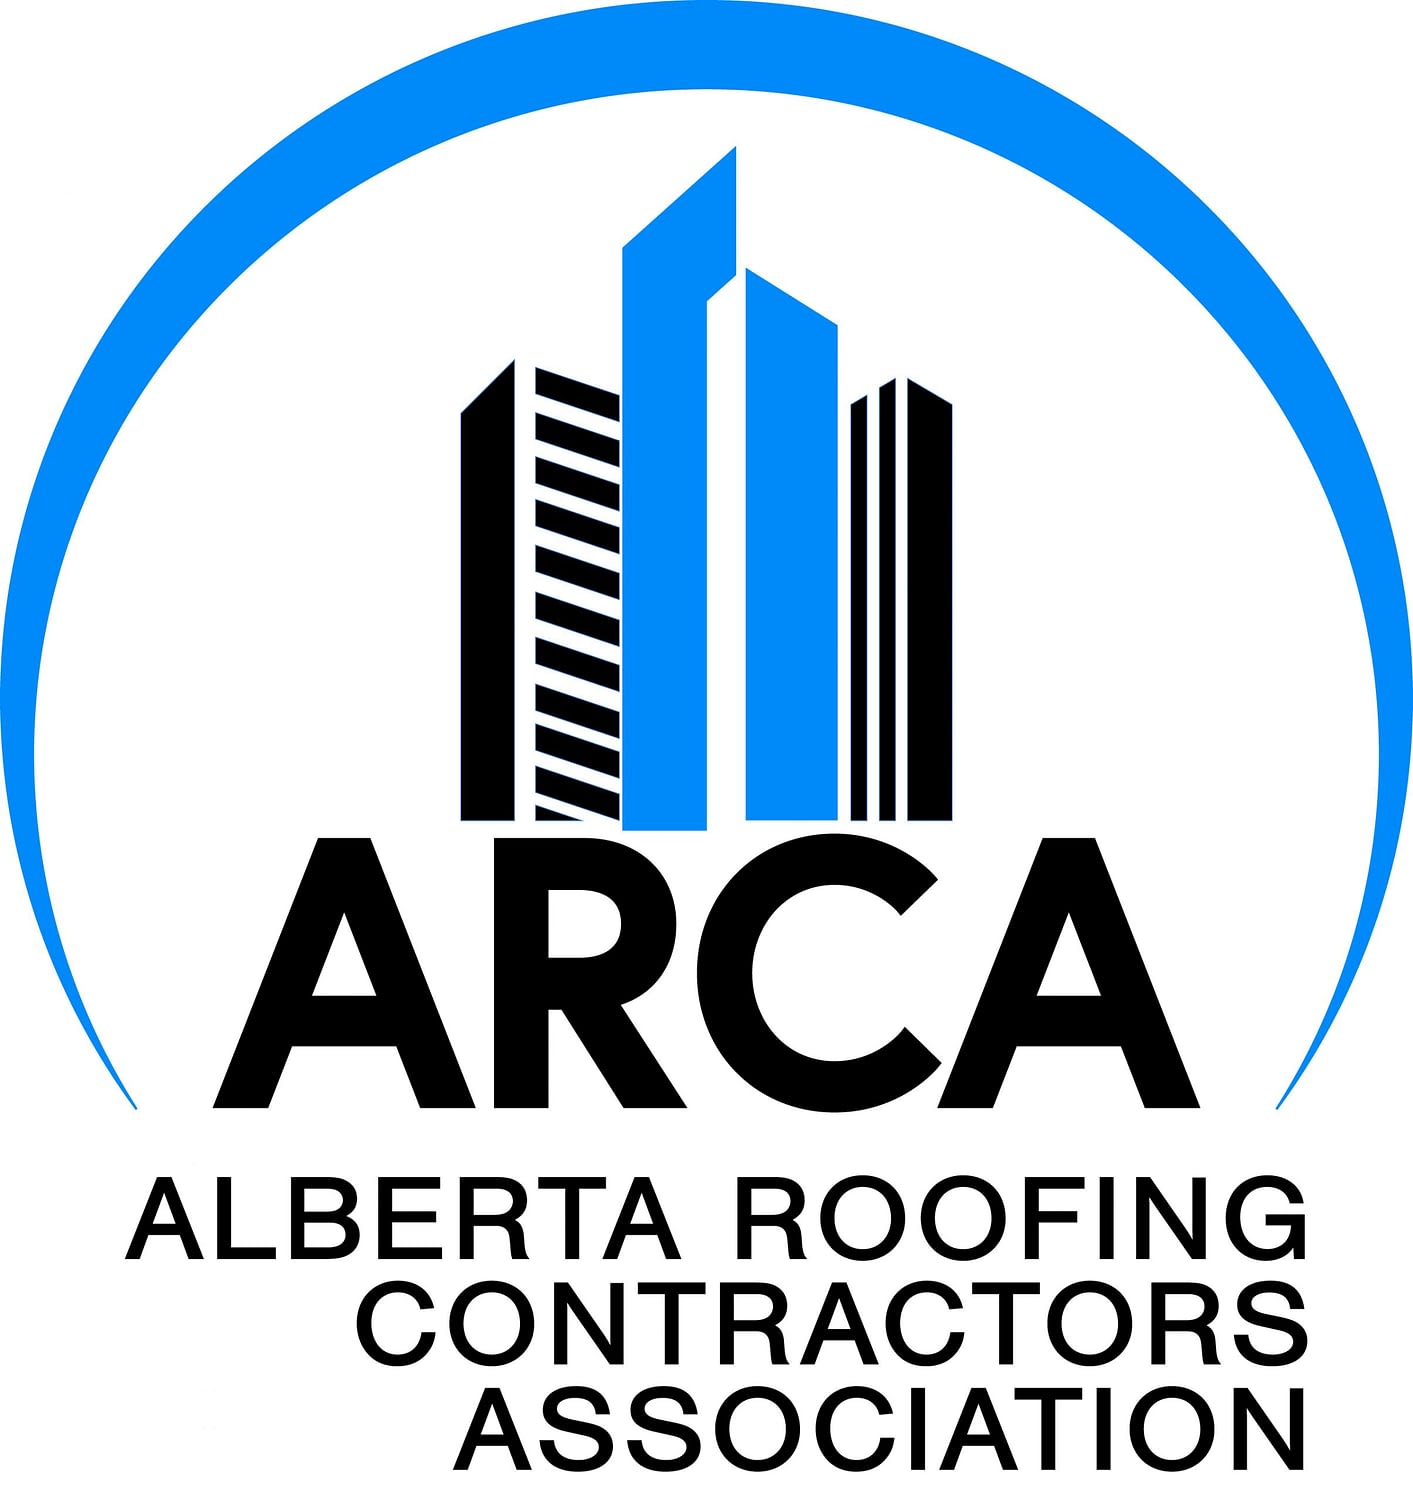 ARCA - Members of the Alberta Roofing Contractors Association